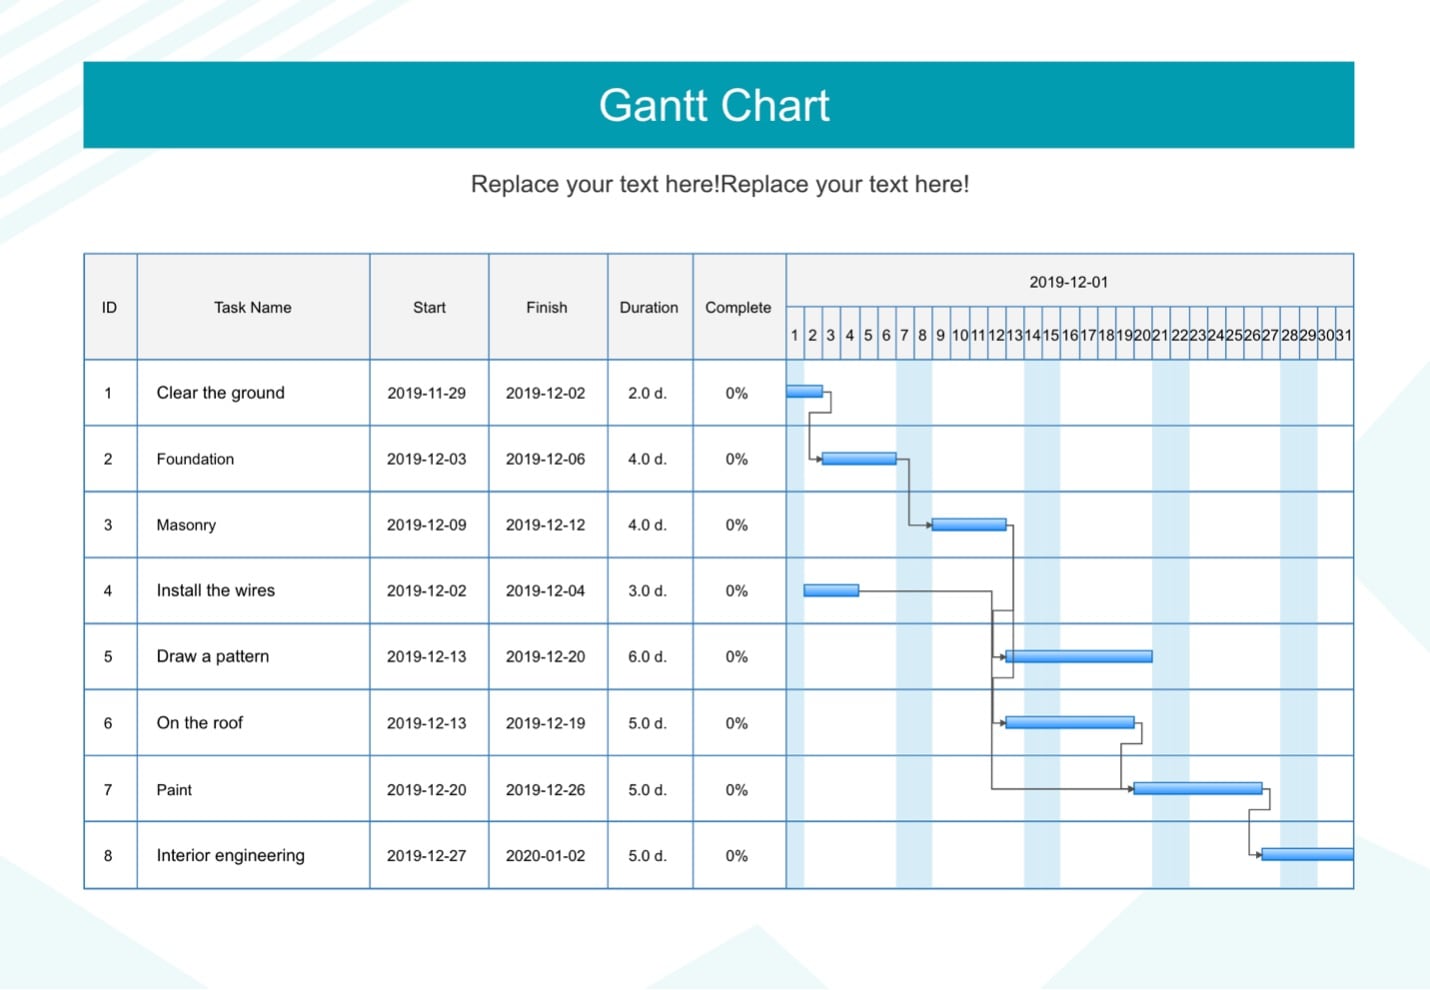 Gantt Chart for Building Construction